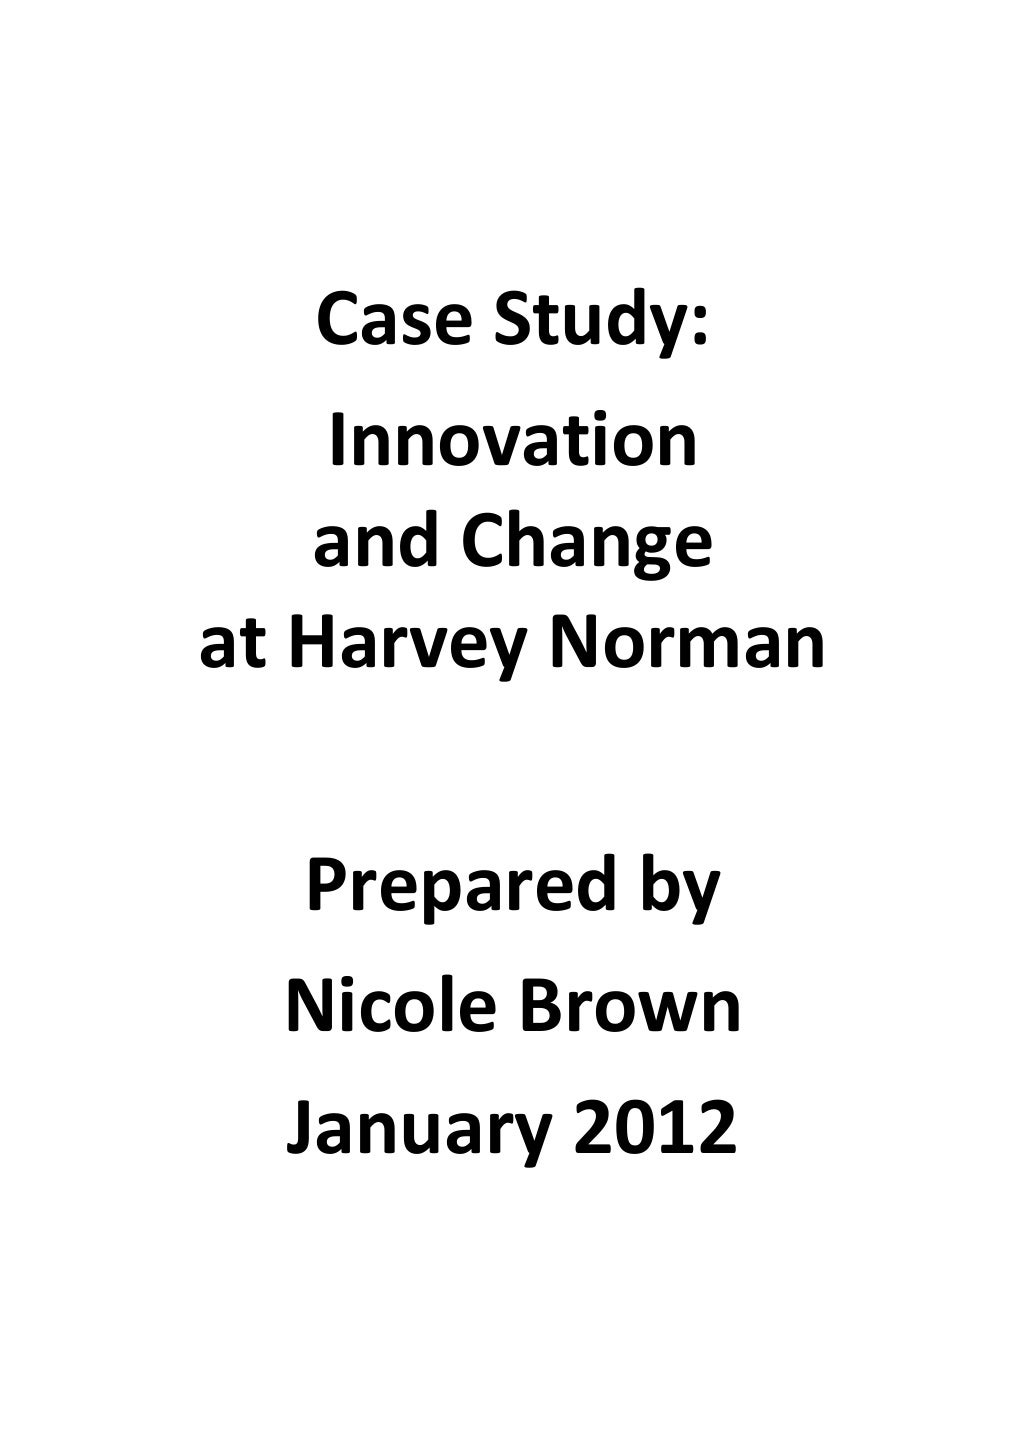 change innovation case study